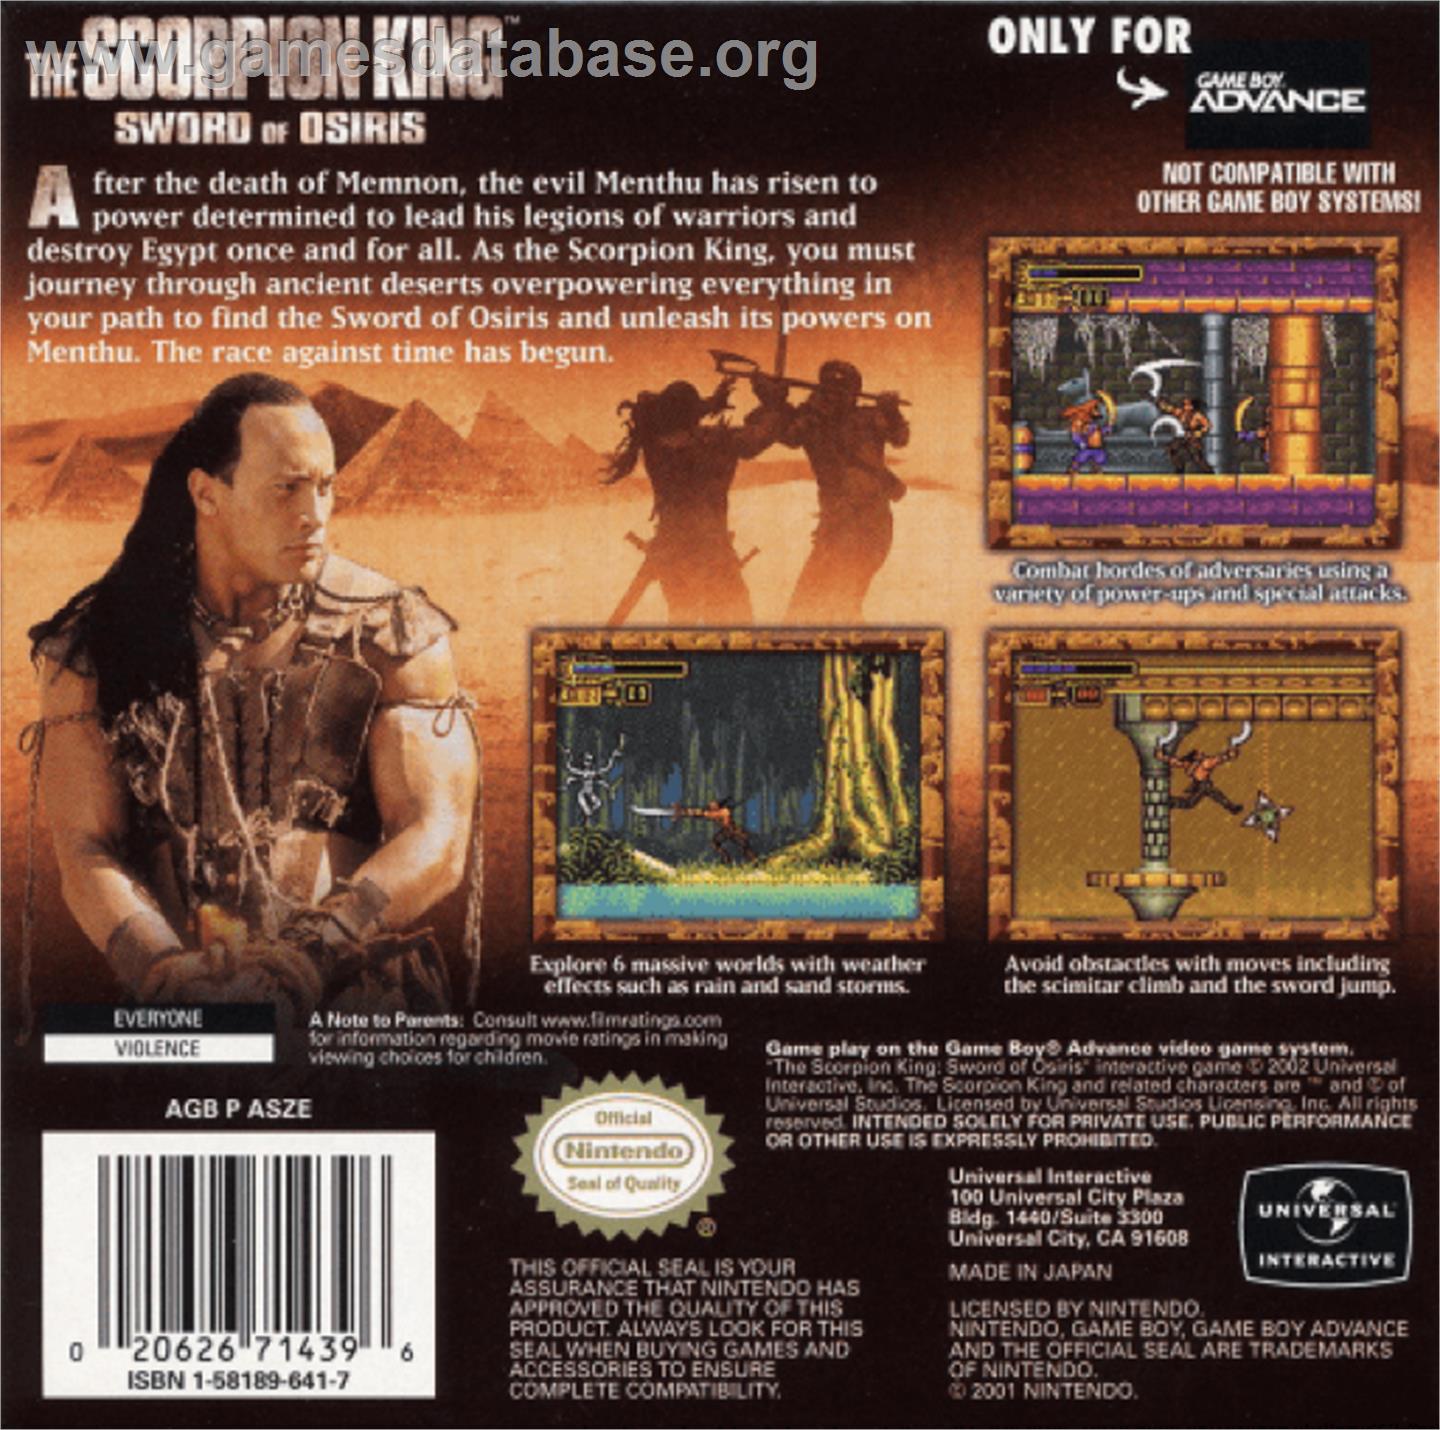 Scorpion King: Sword of Osiris - Nintendo Game Boy Advance - Artwork - Box Back